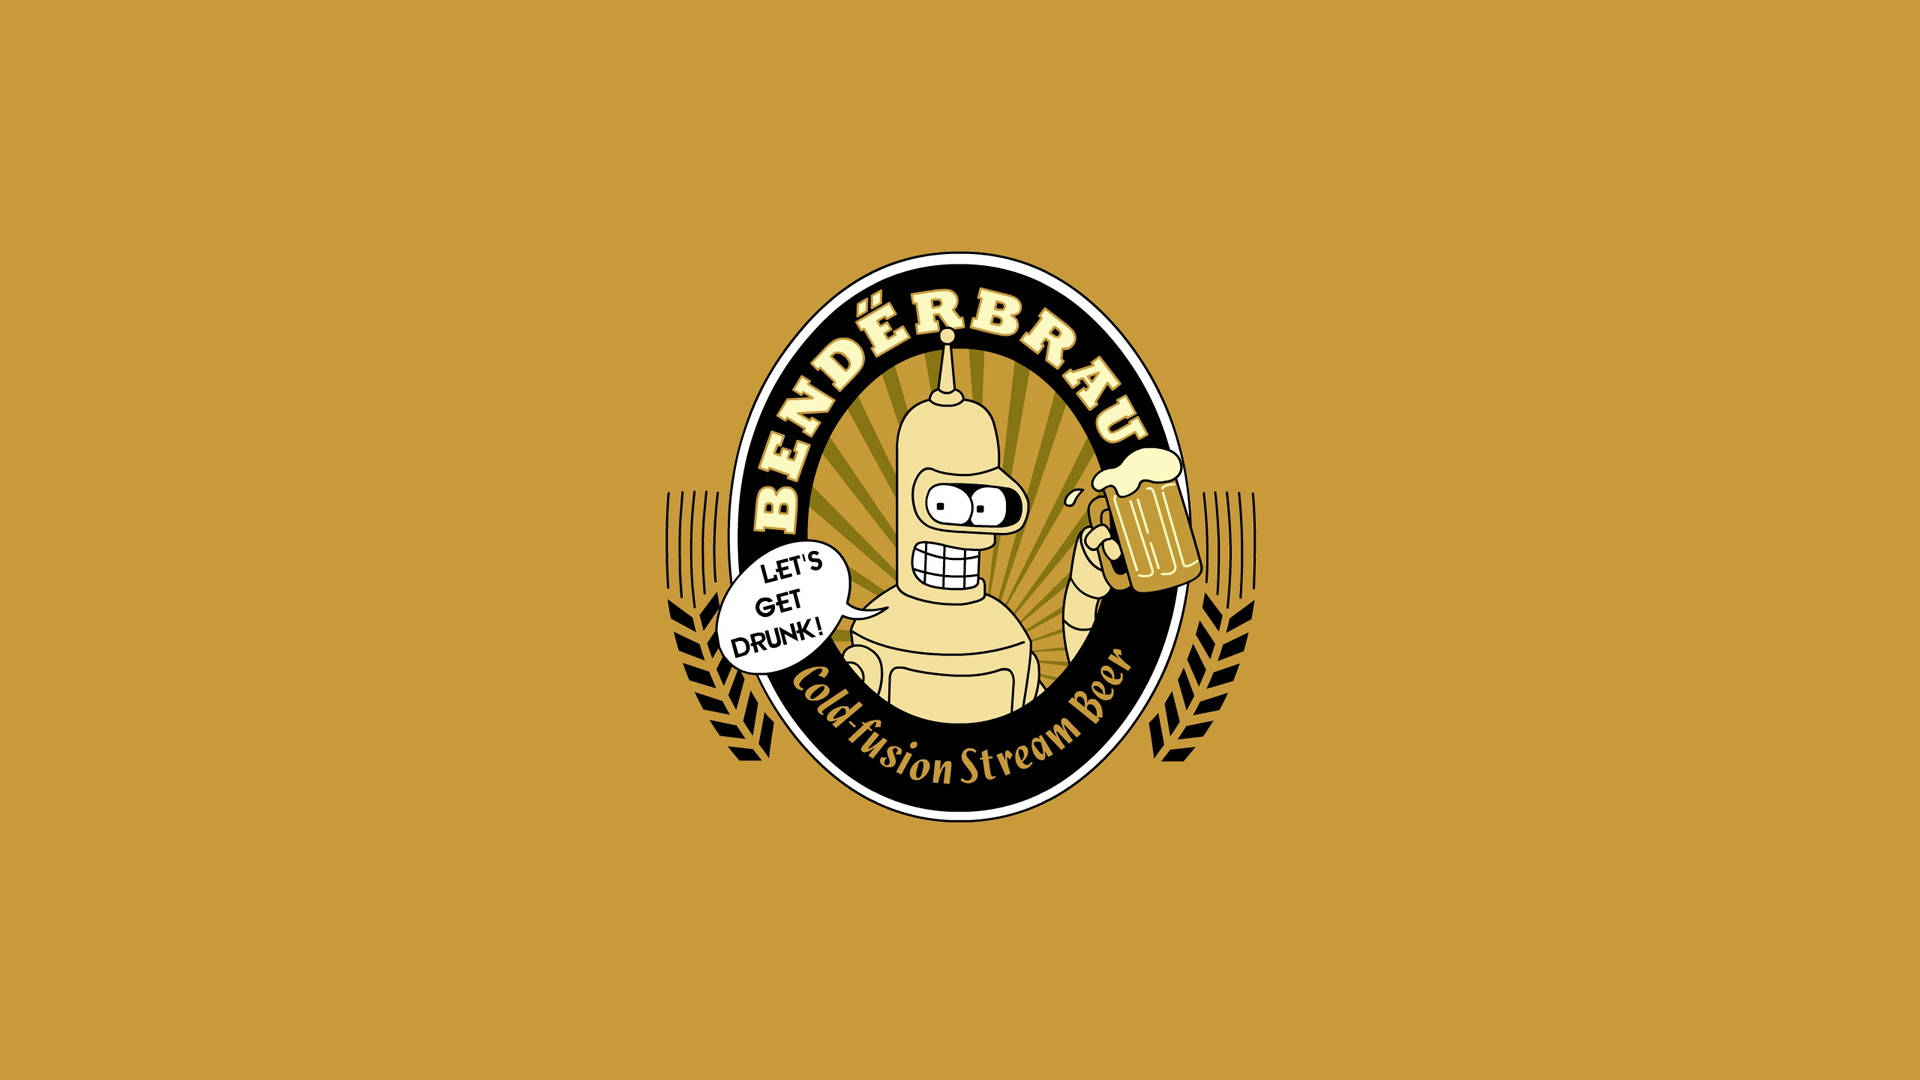 Futurama Bender Beer Logo Tapet: Pynt din skærm med et vidunderligt Futurama Bender ølmærke logo. Wallpaper